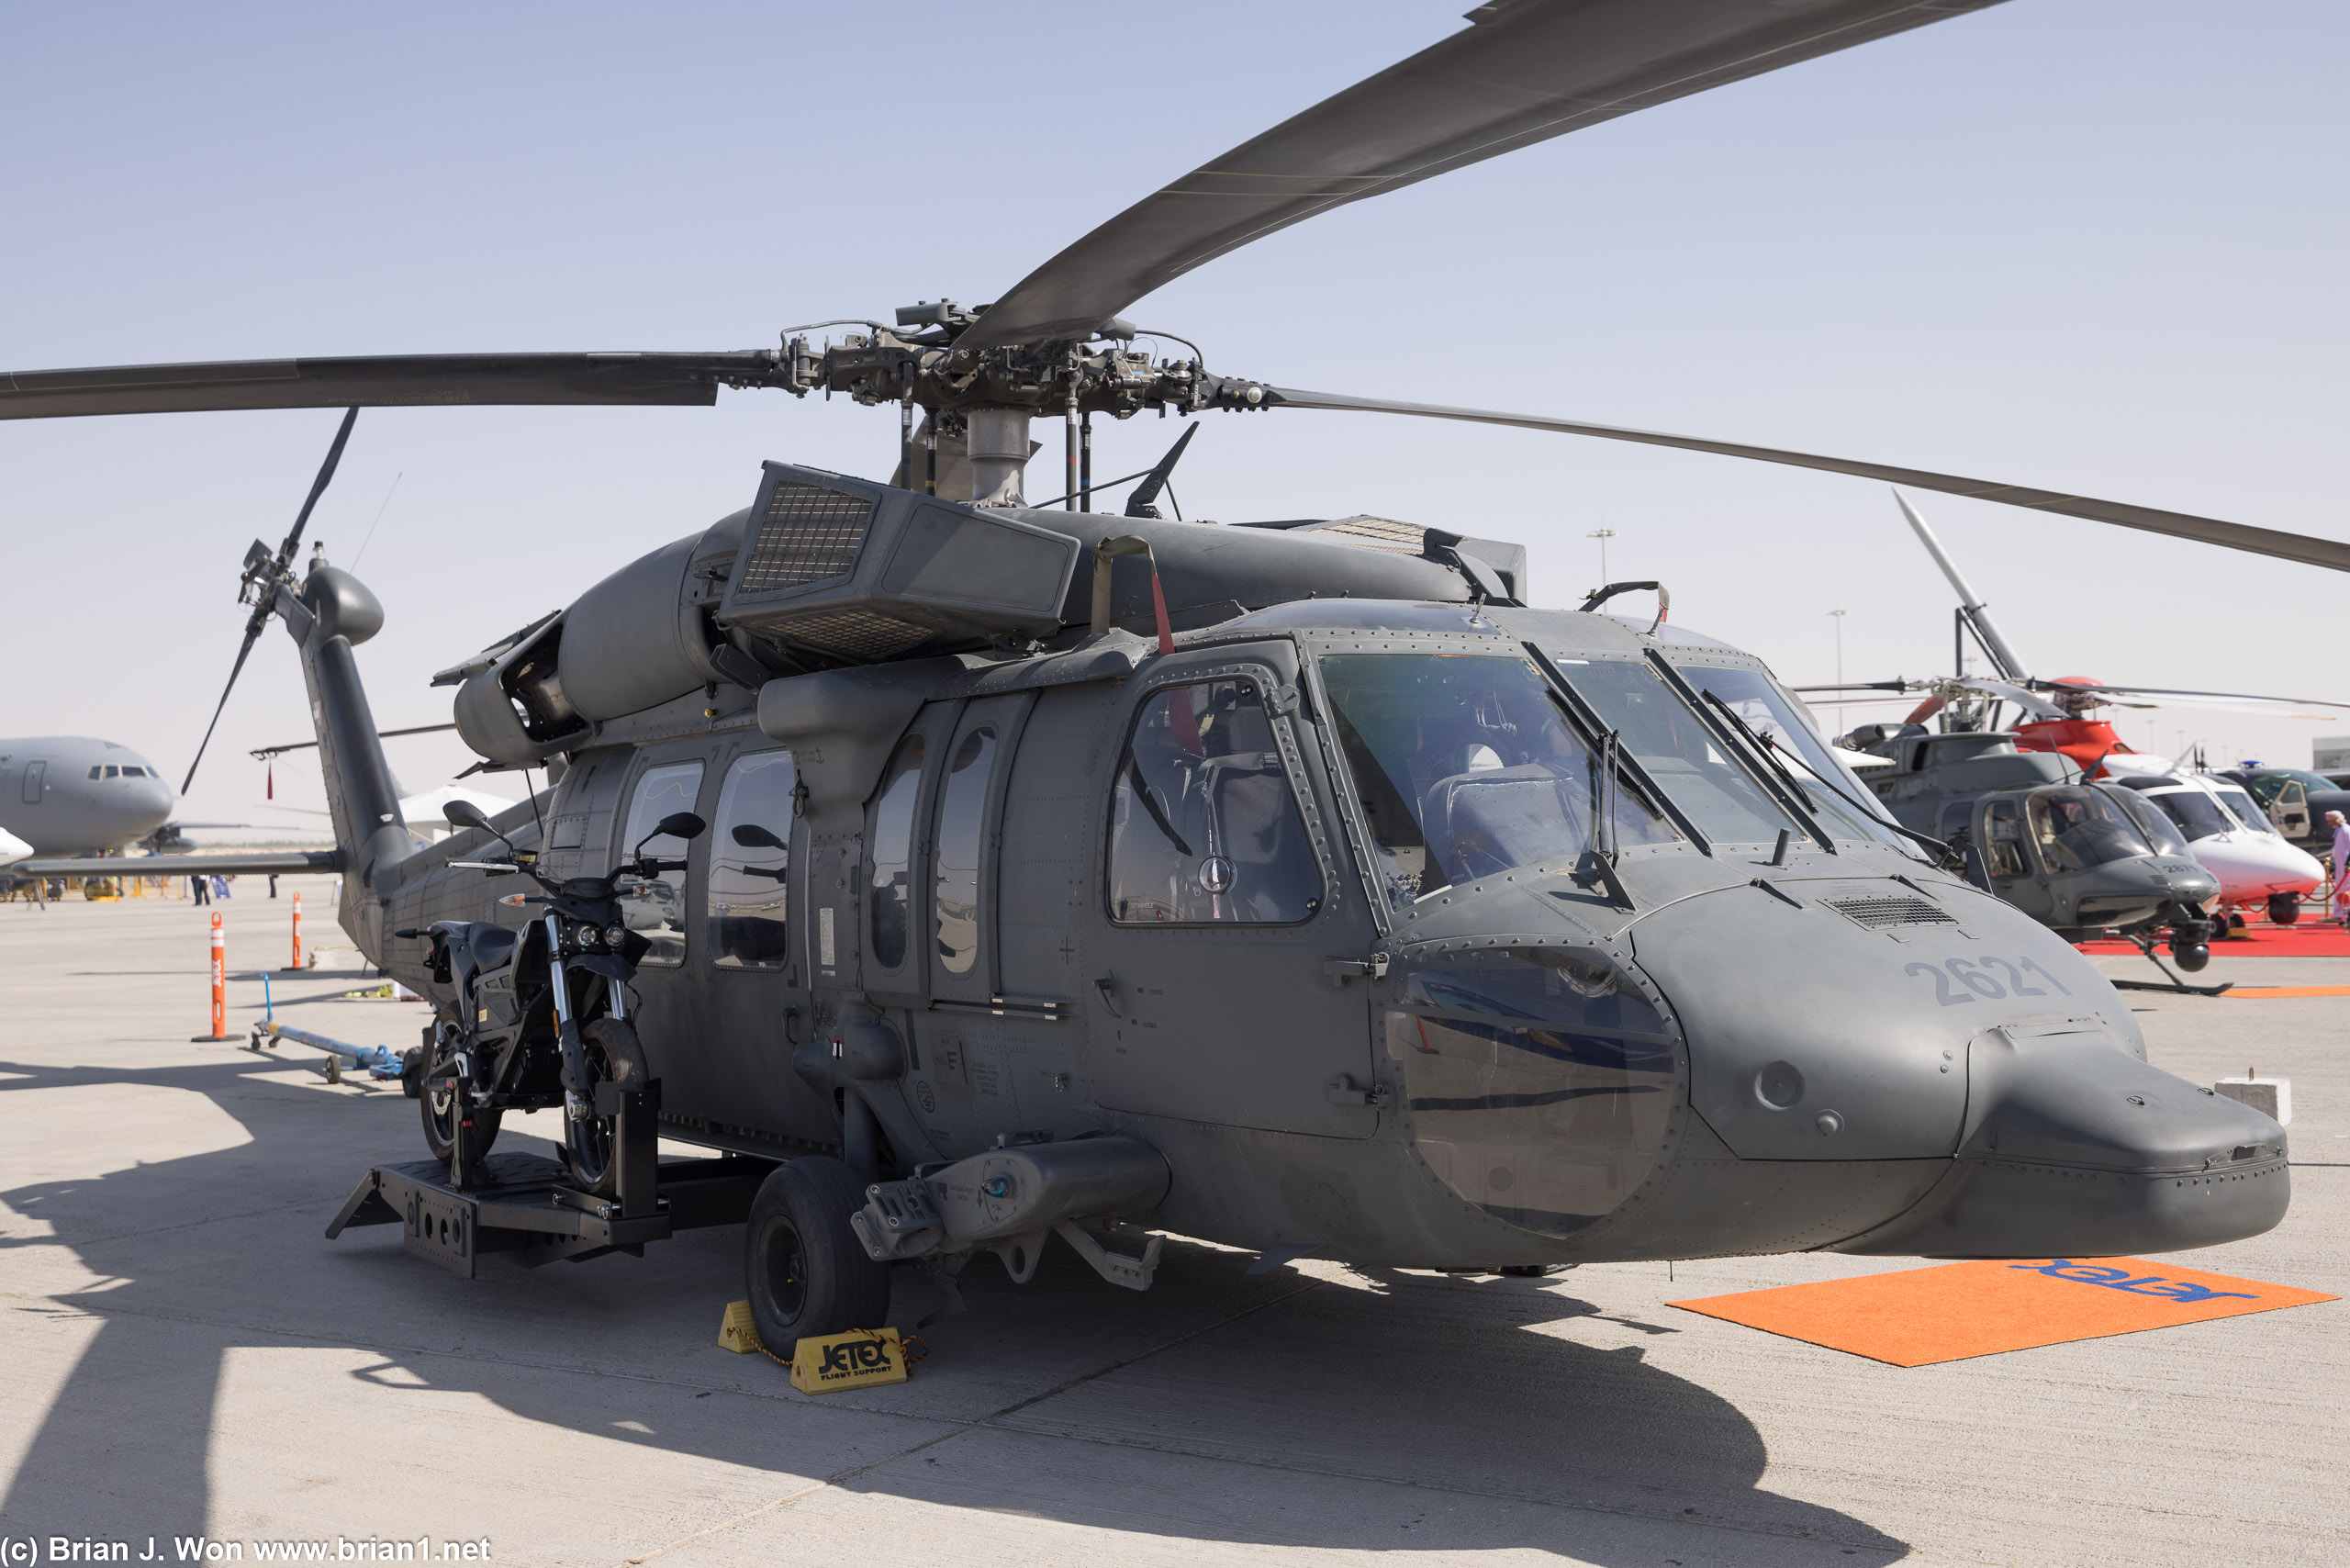 UAE UH-60M Blackhawk. Note dust separators and nose mount for sensor turret.